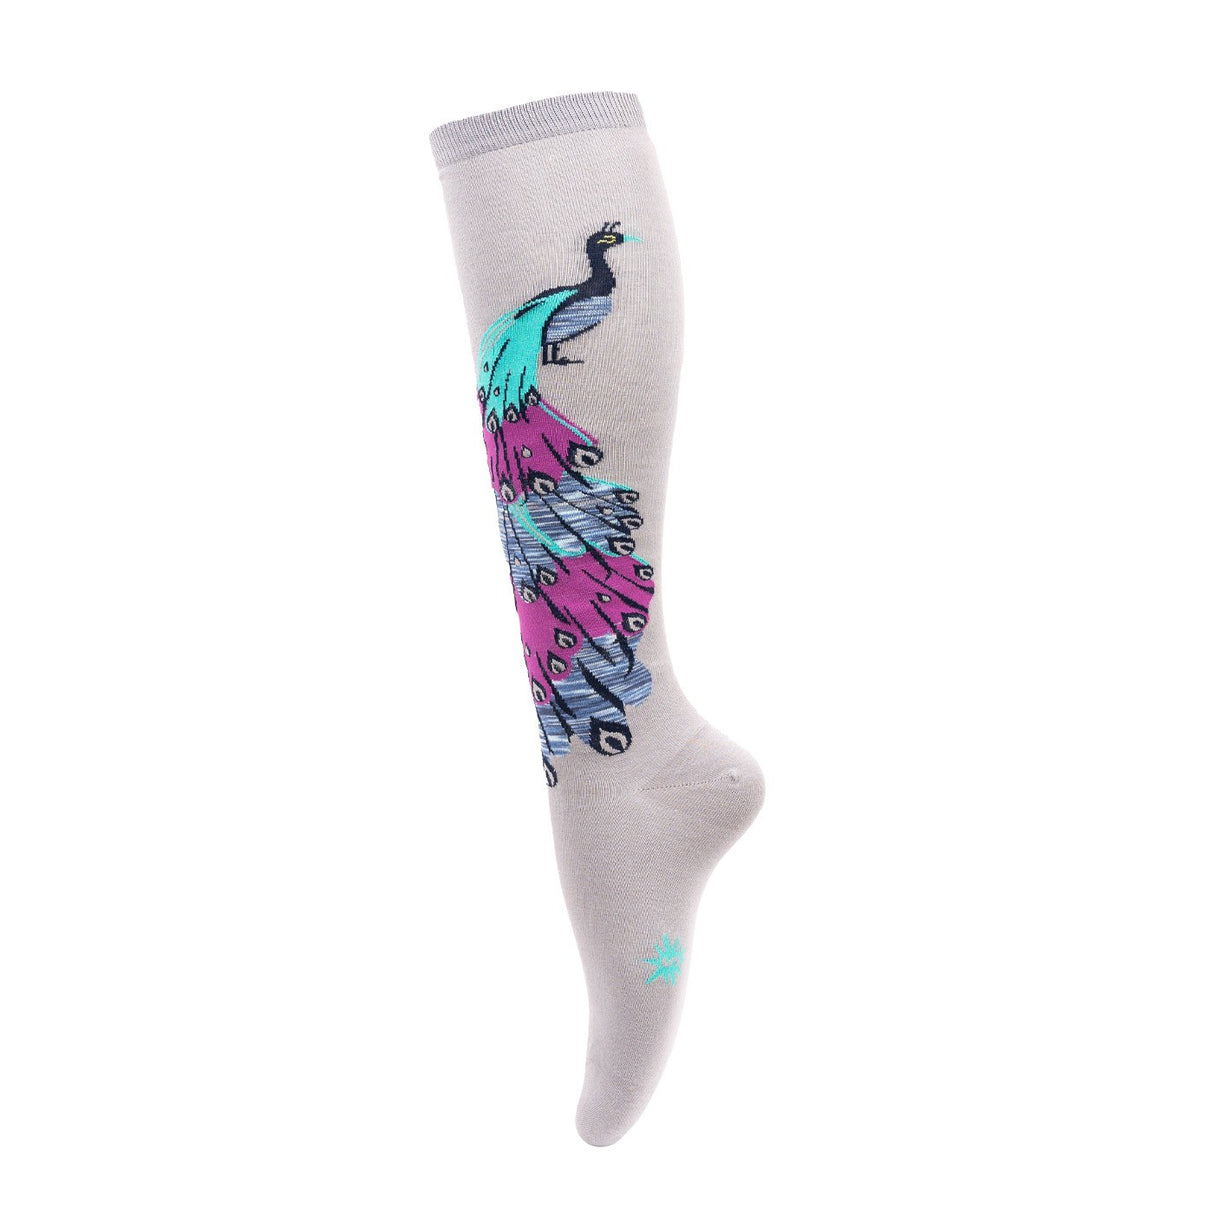 Sock It To Me & FWS Exclusive A Fan-tastic Tail Knee High Socks